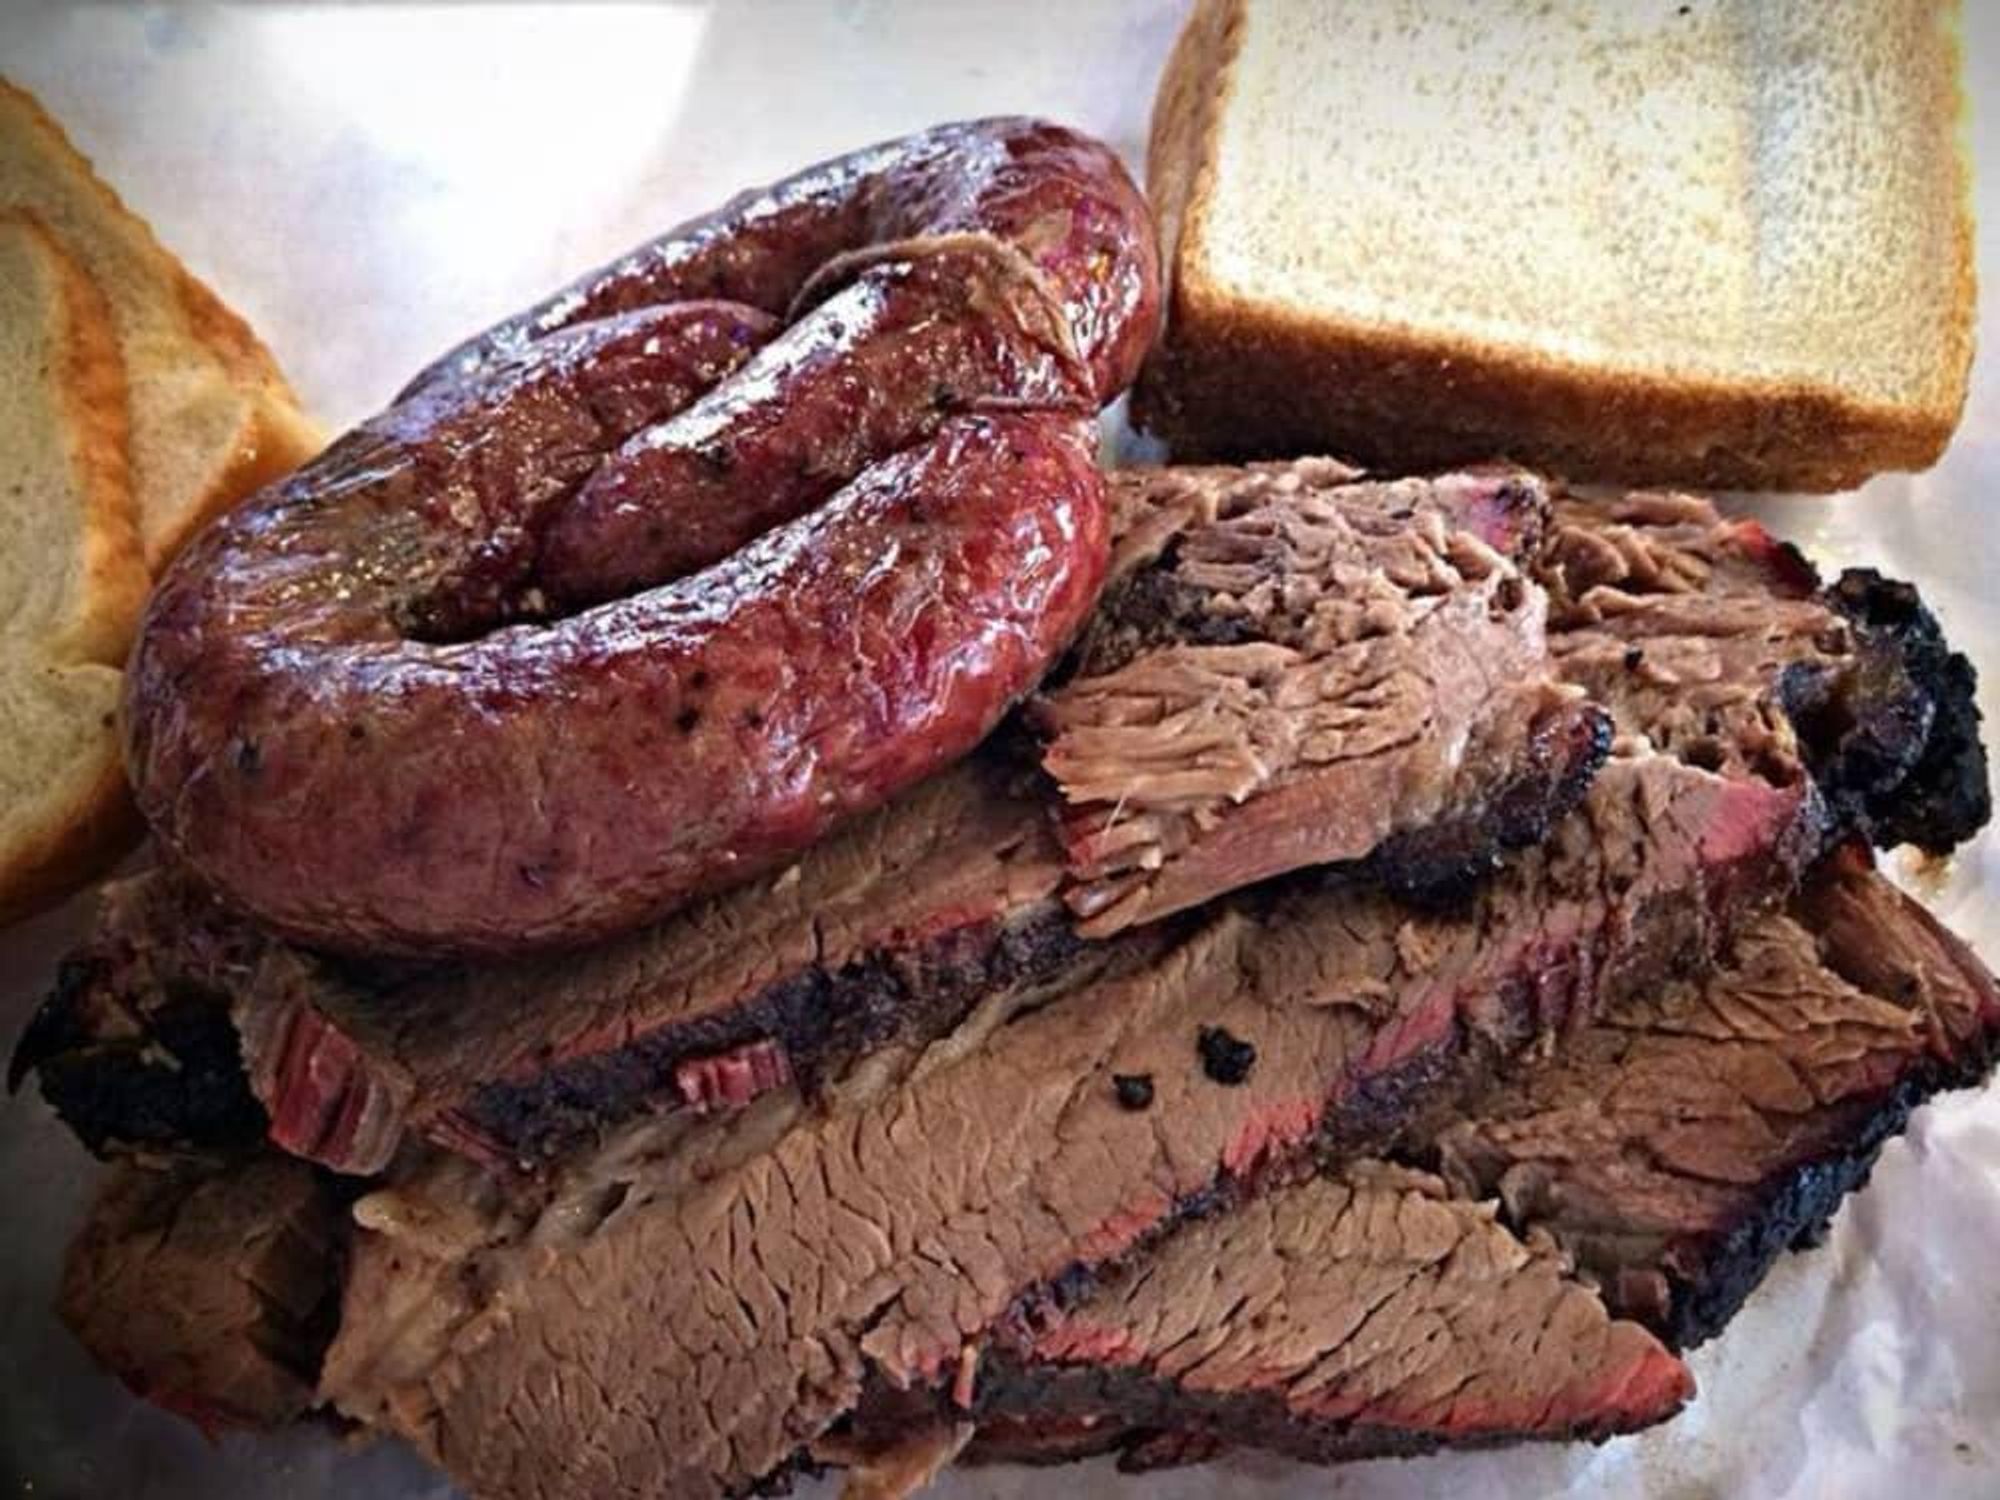 Brisket and sausage at Lockhart Smokehouse in Dallas